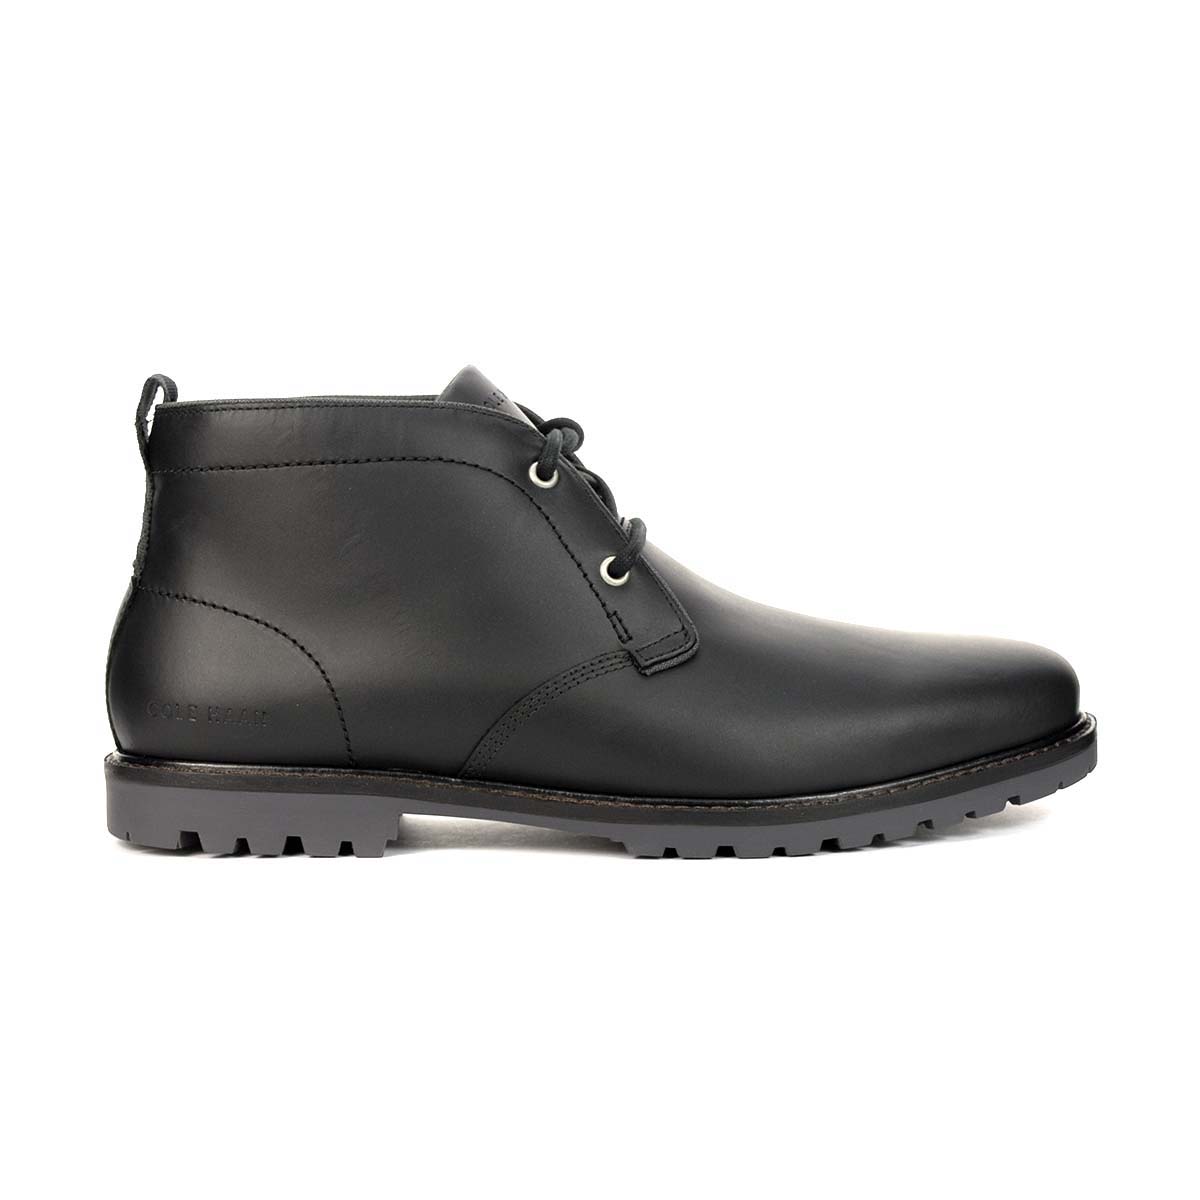 Cole Haan Men's Midland Lug Black/Grey Pintstripe Leather Chukka Boots C37597